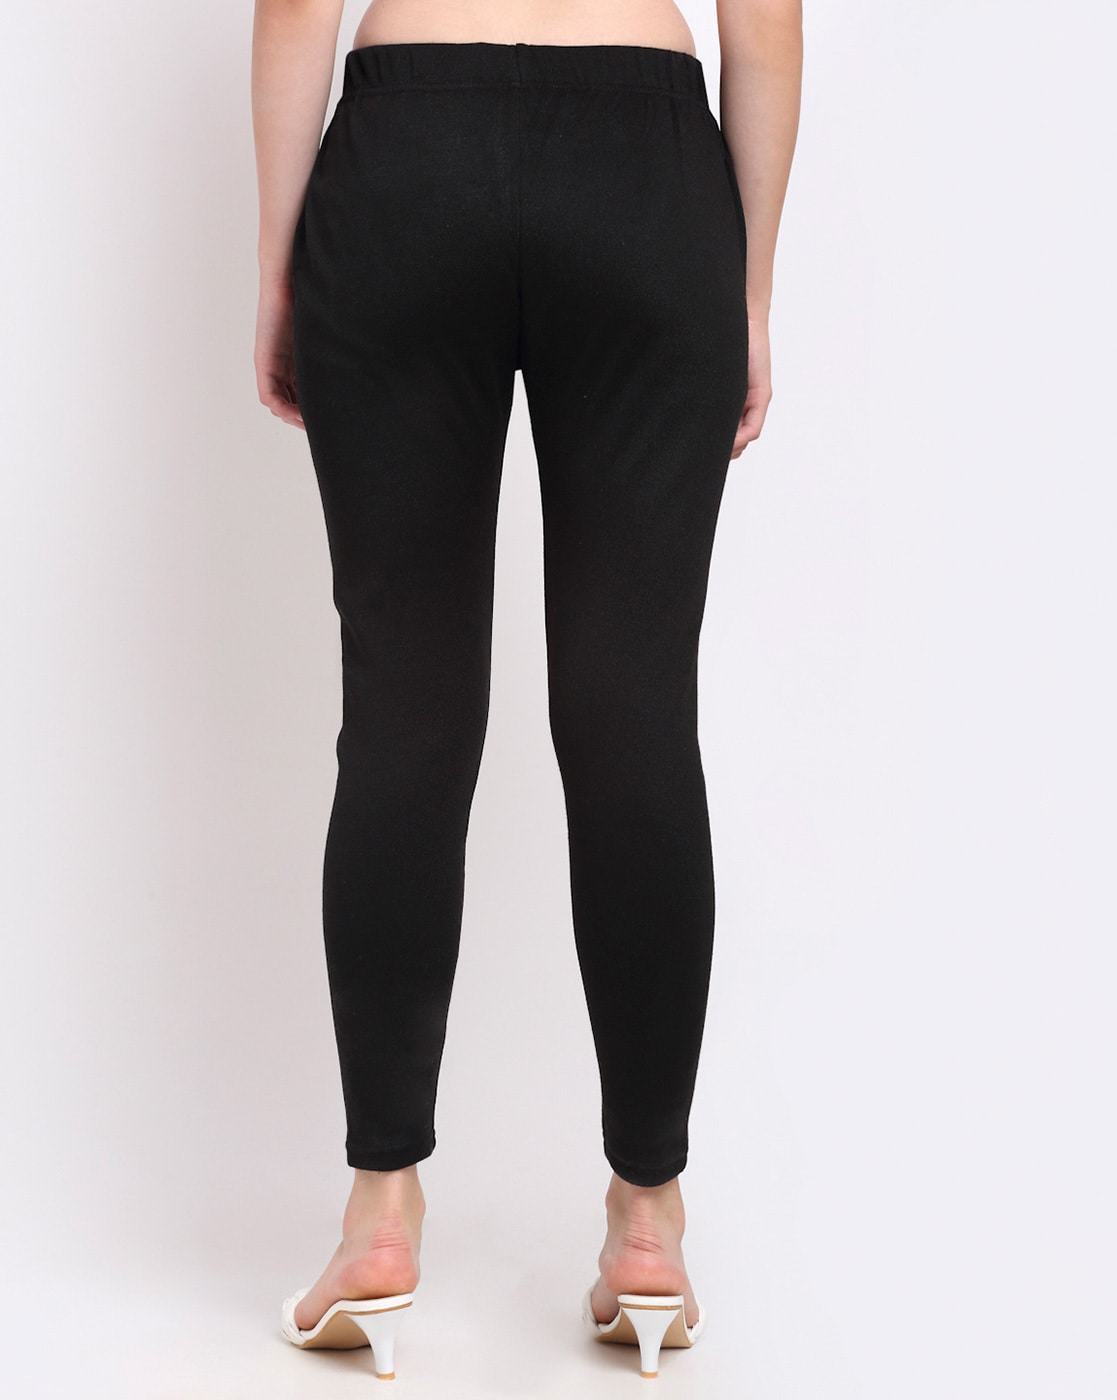 Womens ZENANA Full Ankle Length Leggings Basic Cotton Stretch Pants Yoga  S-3X | eBay